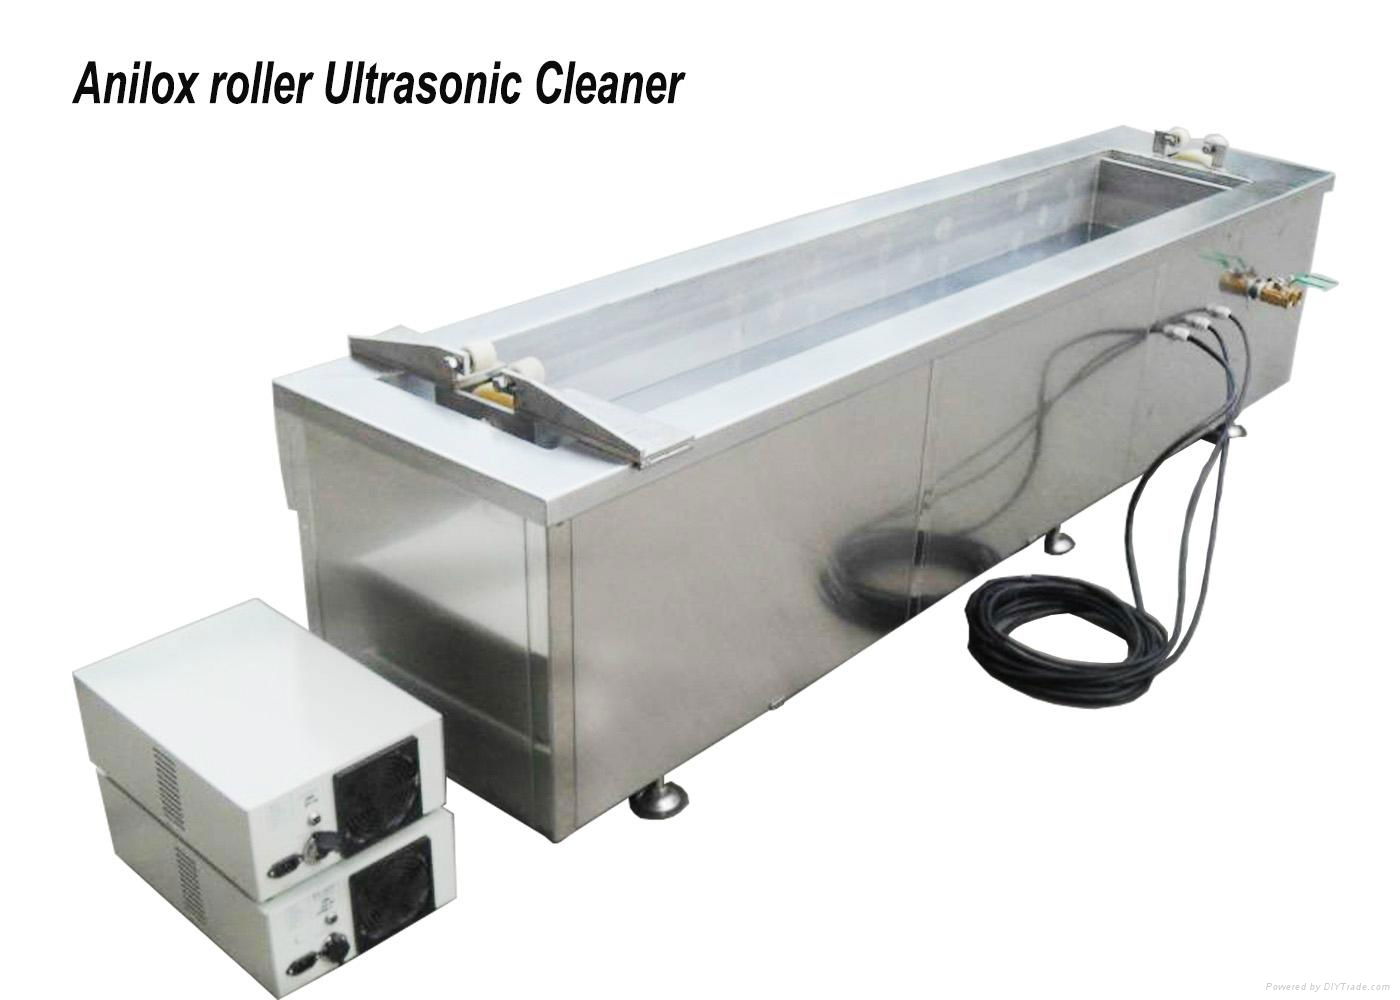 Limplus anilox roller ultrasonic cleaner machine